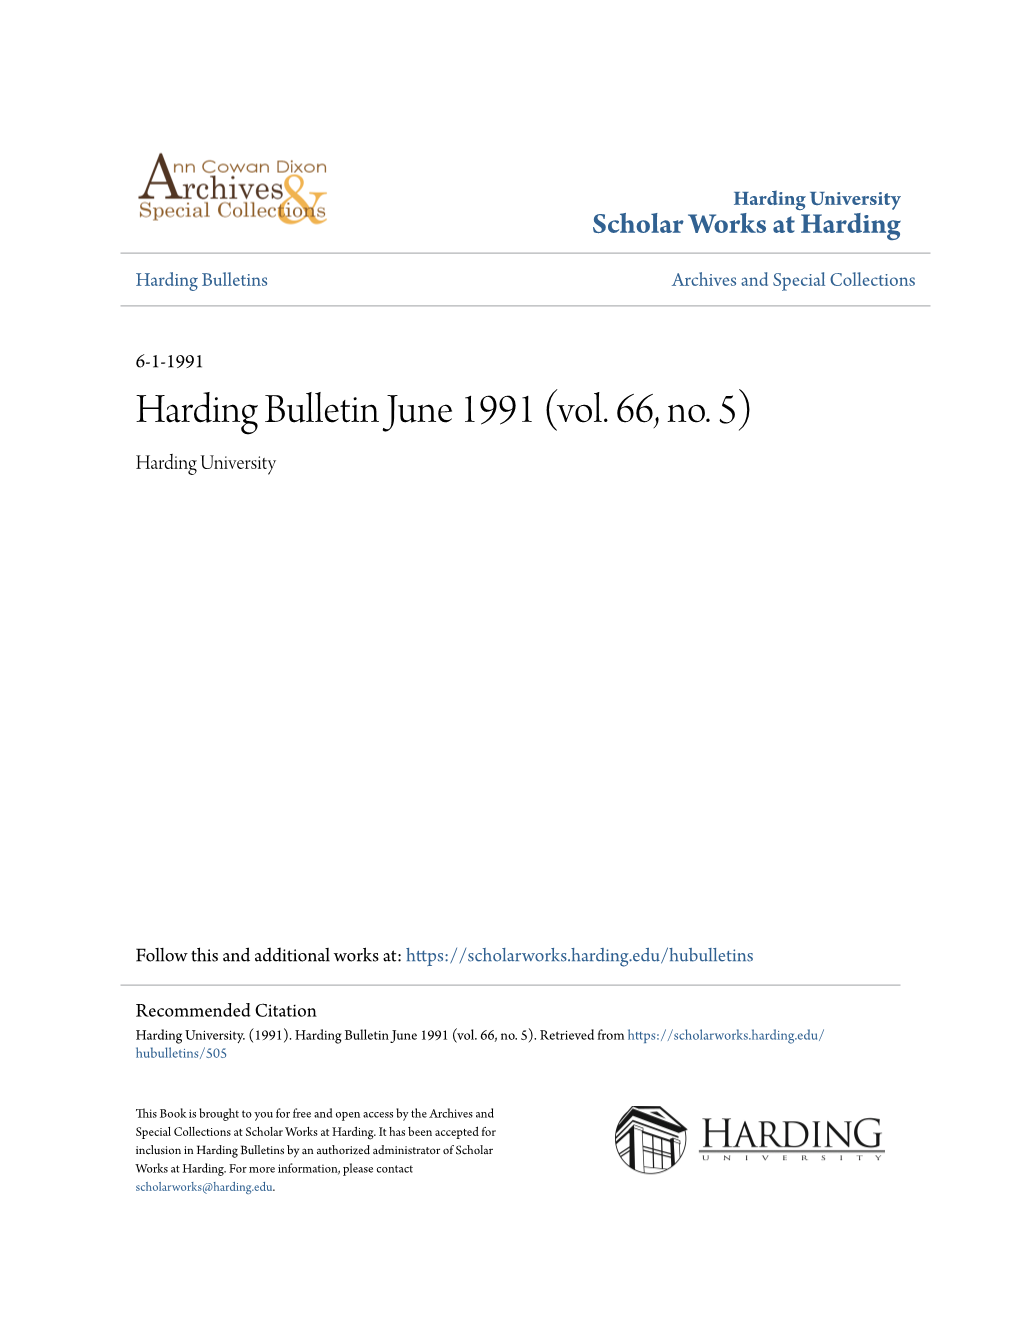 Harding Bulletin June 1991 (Vol. 66, No. 5) Harding University